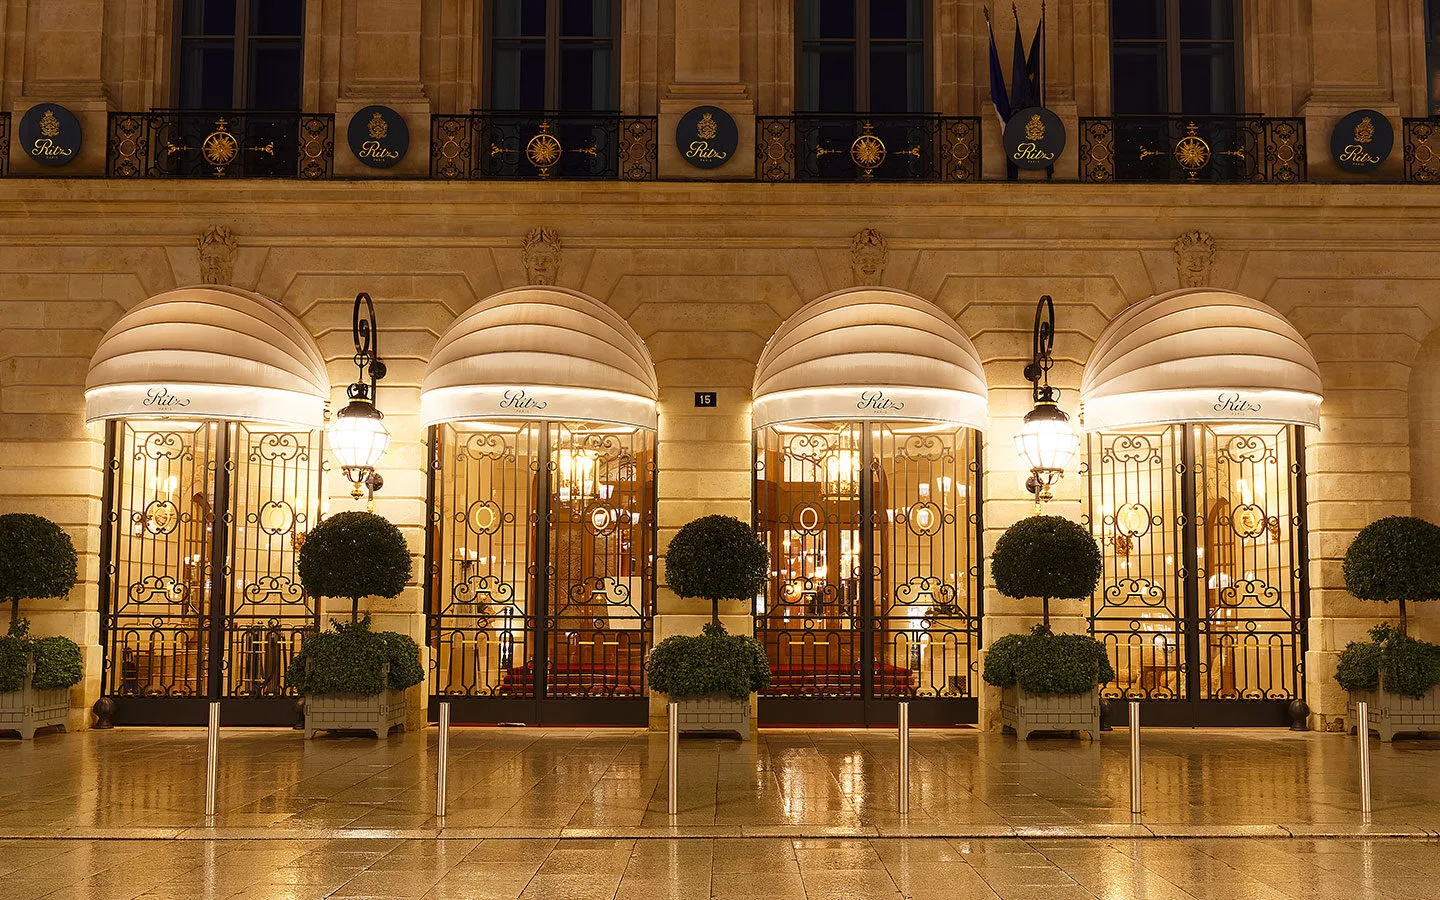 The entrance to the Ritz Hotel in Paris' Place Vendôme